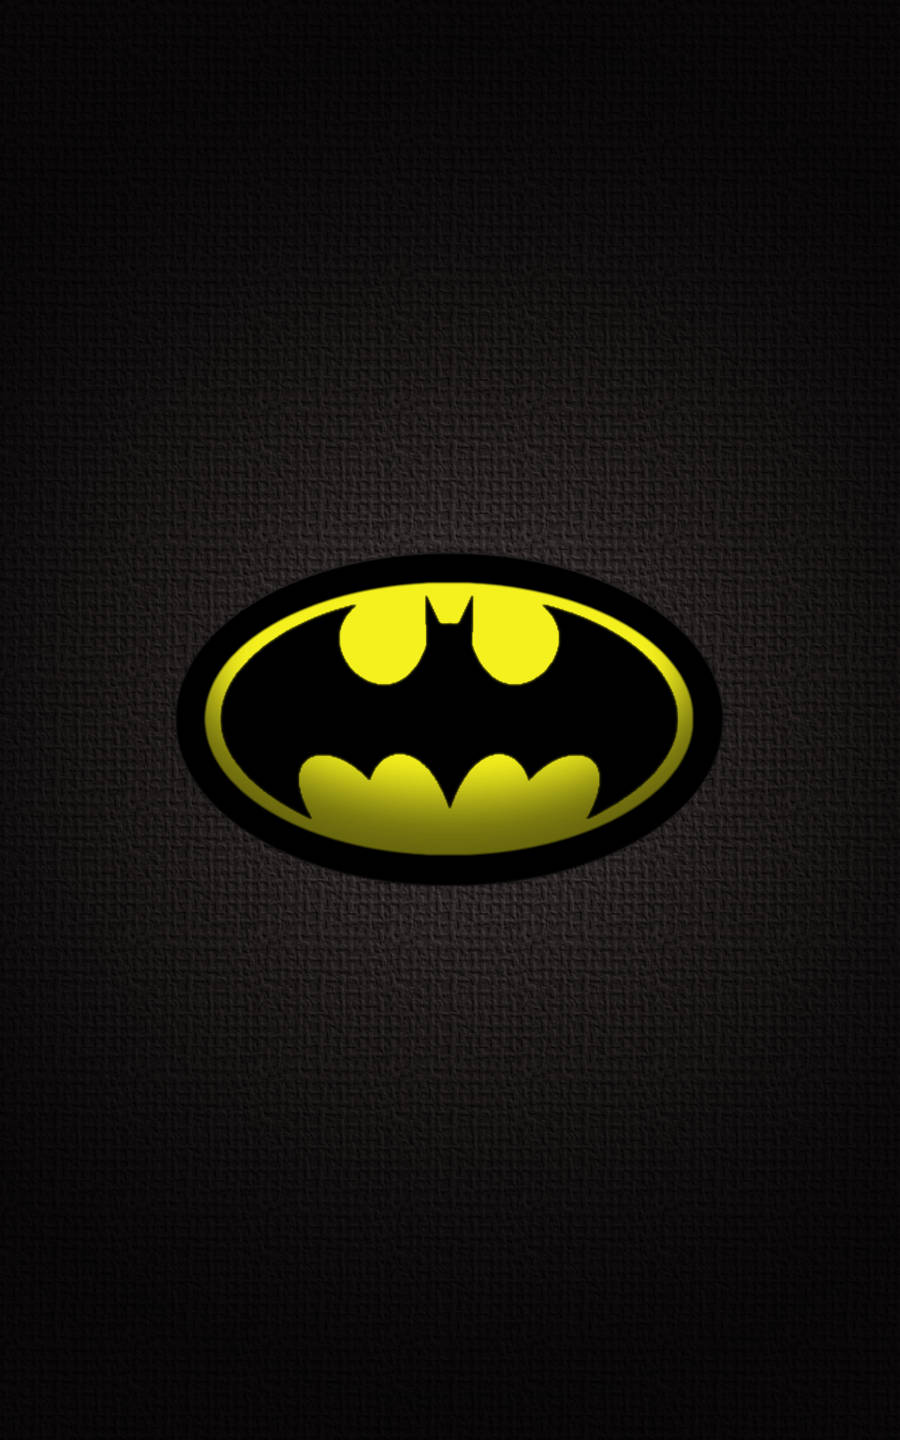 Original Batman Logo on iPhone 4 Wallpaper